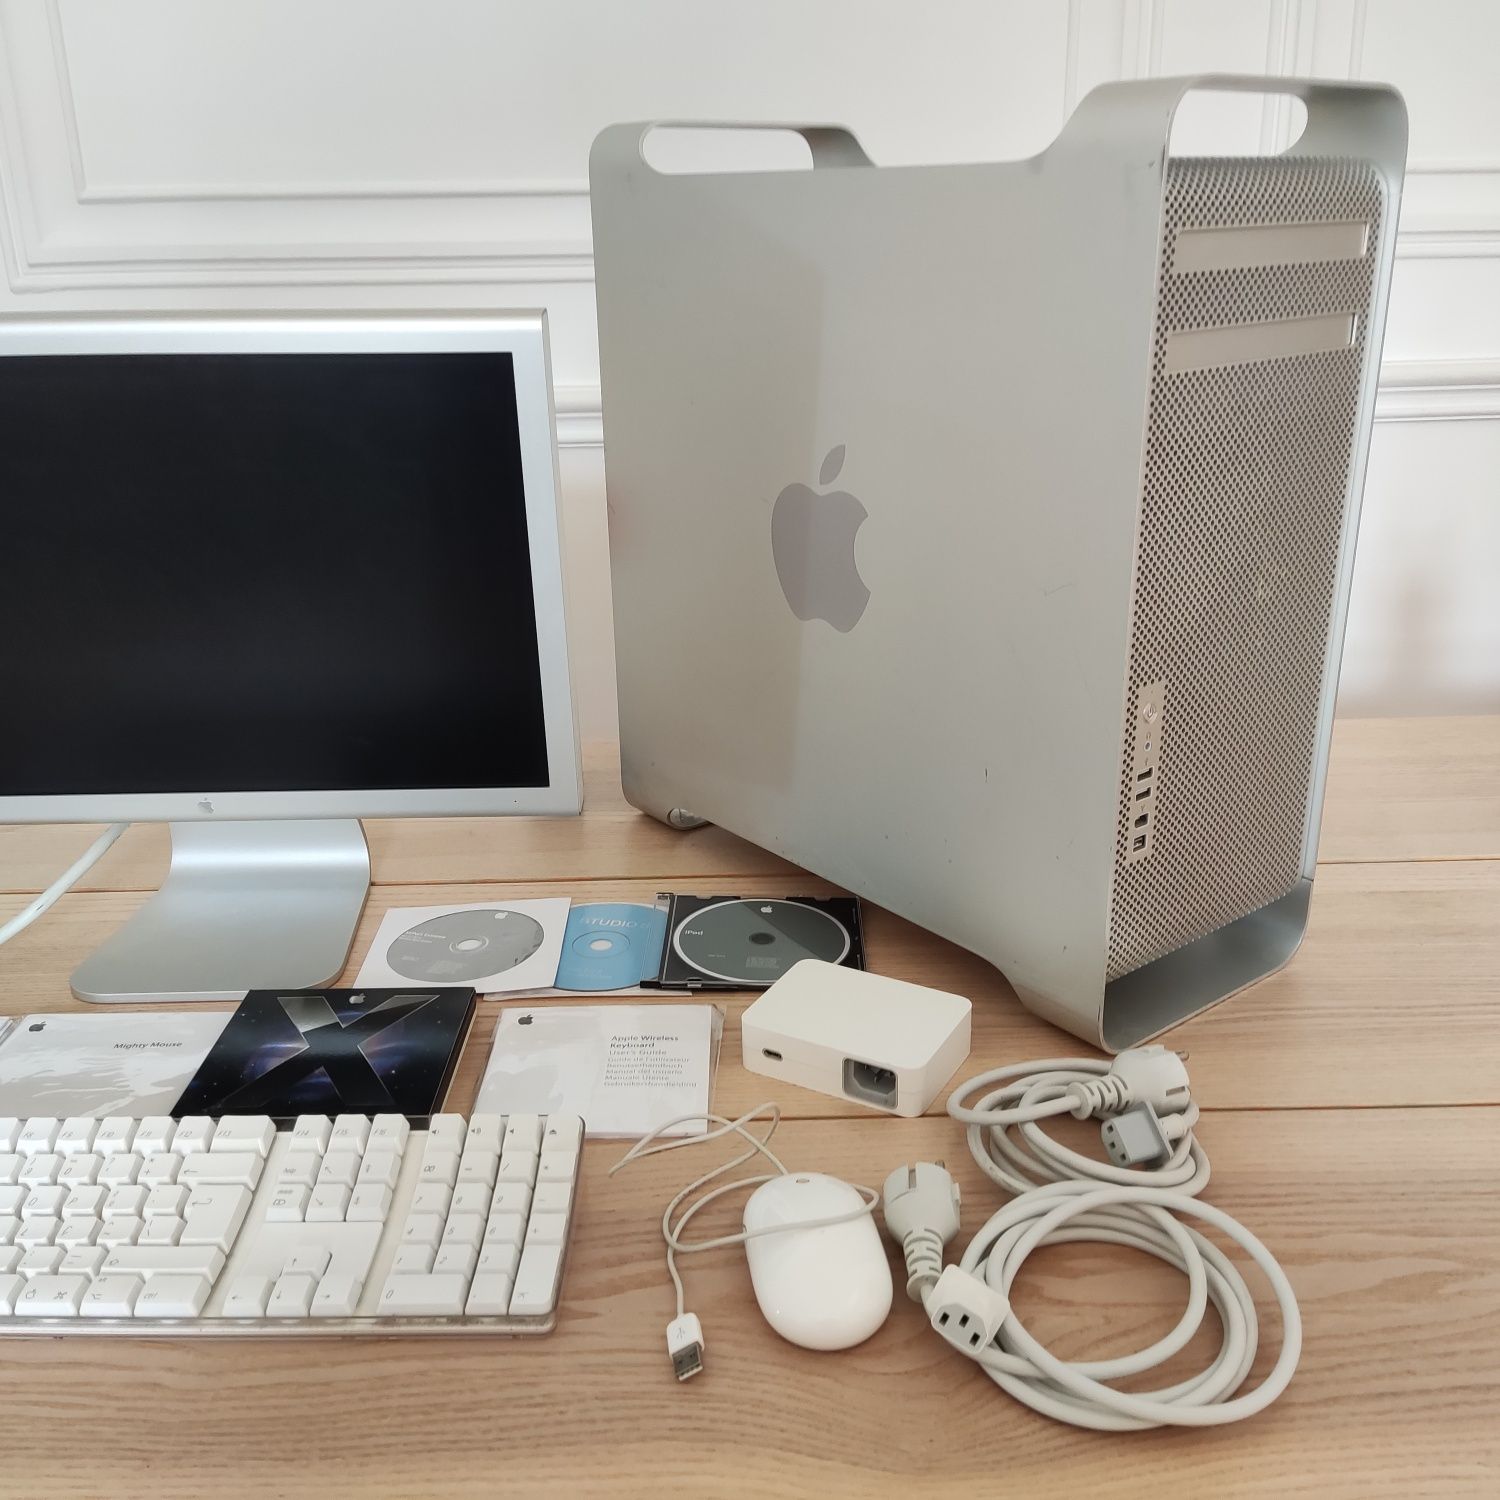 Apple Mac Pro A1186 "Quad Core" Tower Computer Workstation